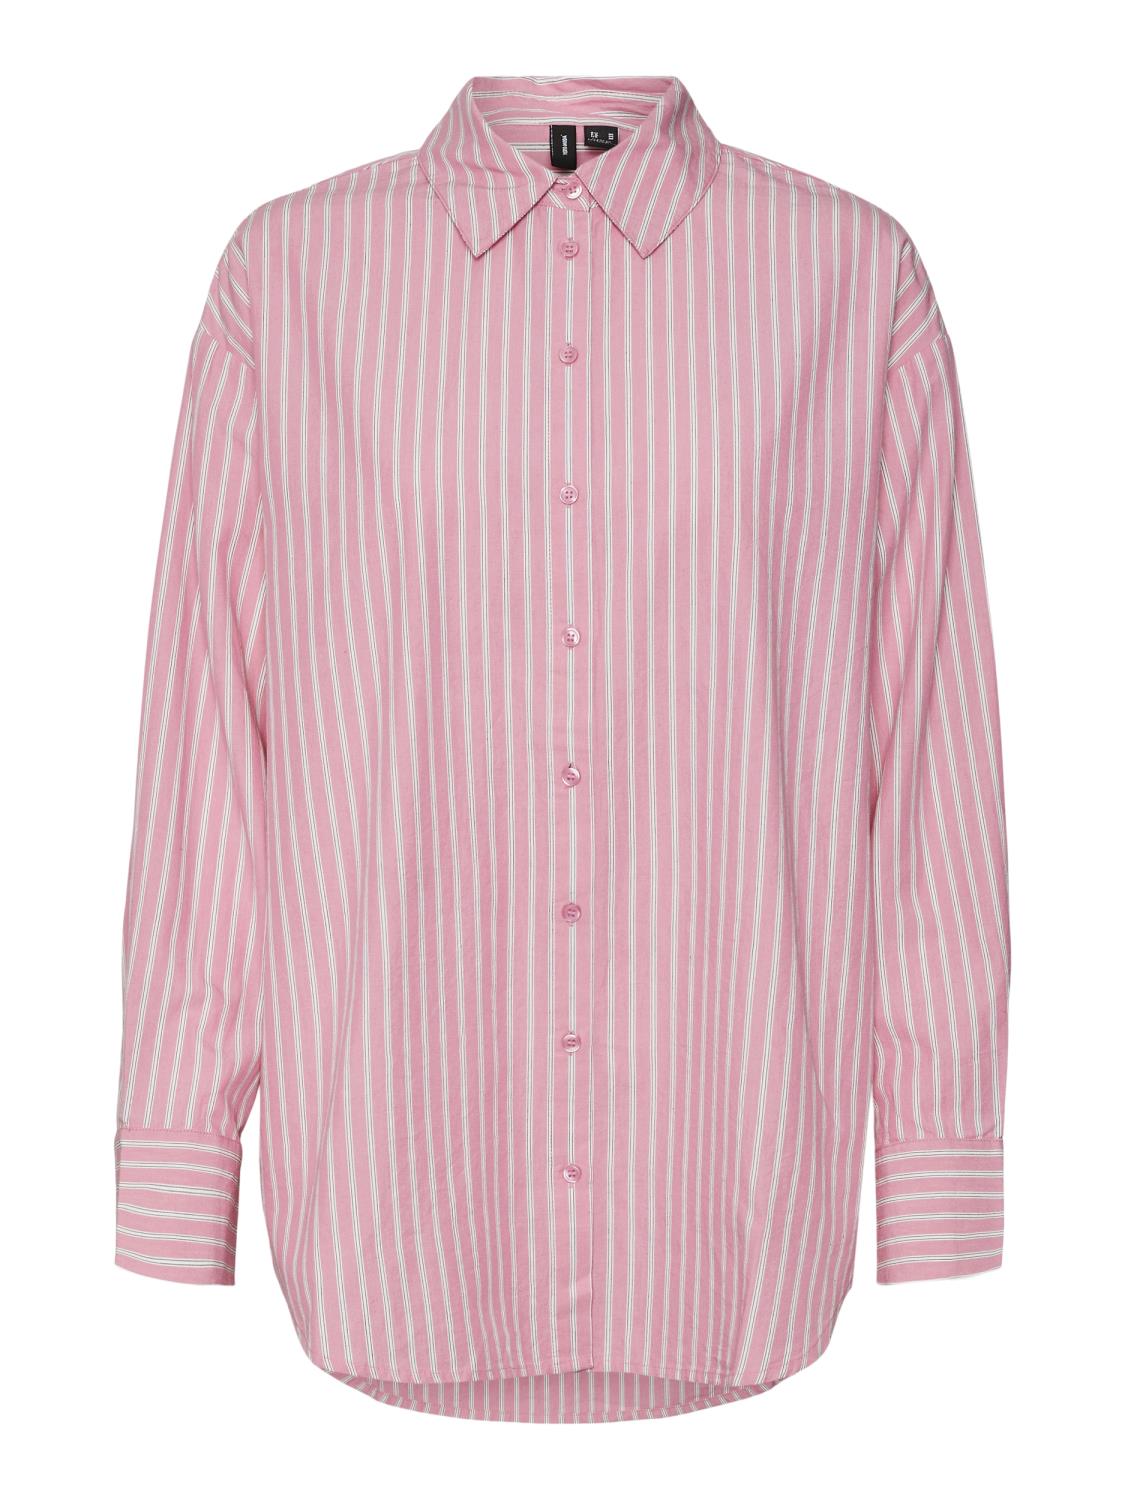 VMGILI ls oversize shirt Pink